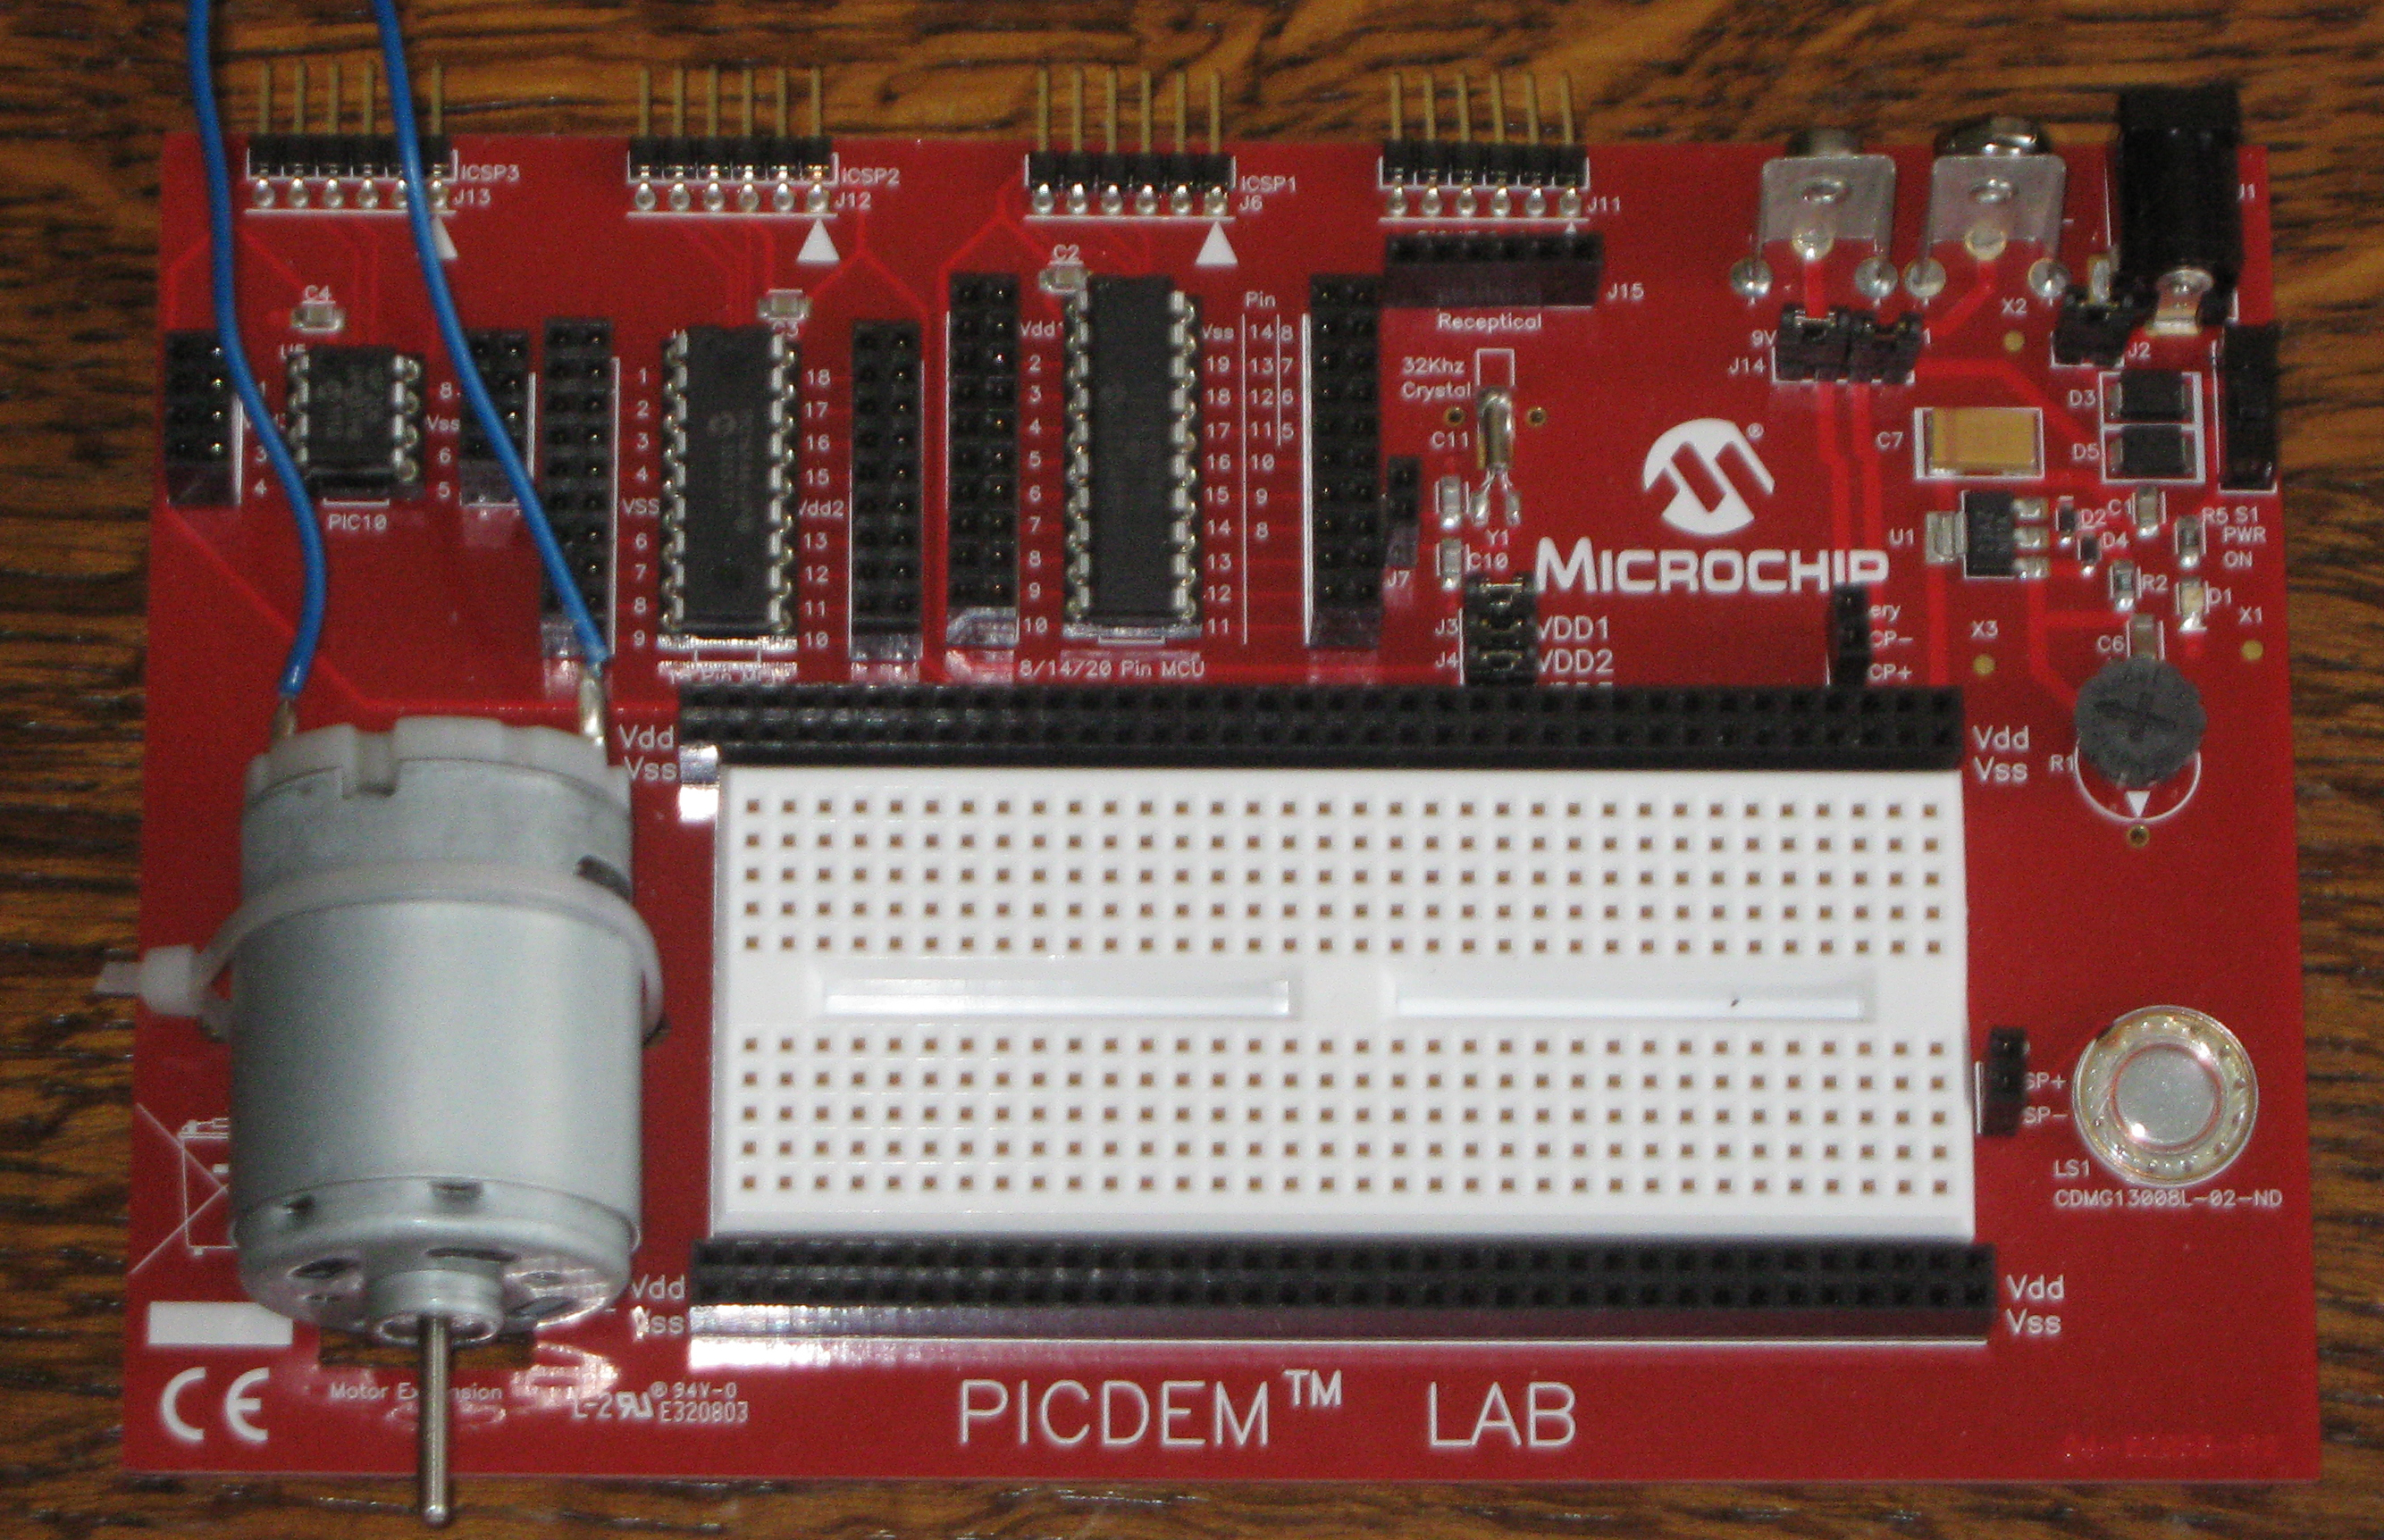 PICDEM Lab Development Kit